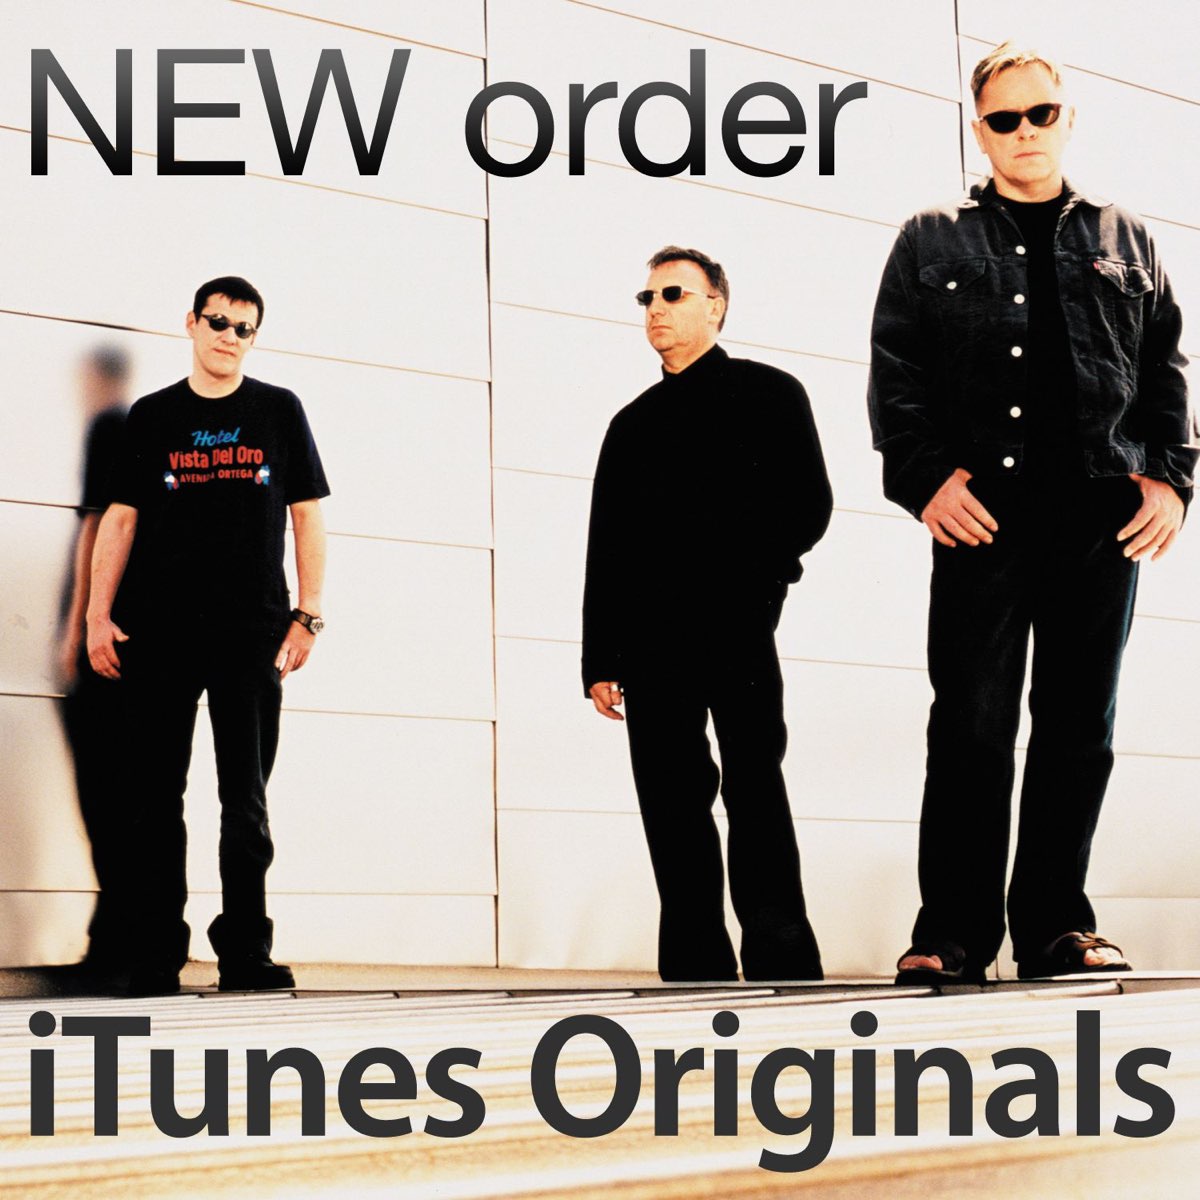 Песня order. New order. Группа New order. New order фото. Солист Нью ордер.